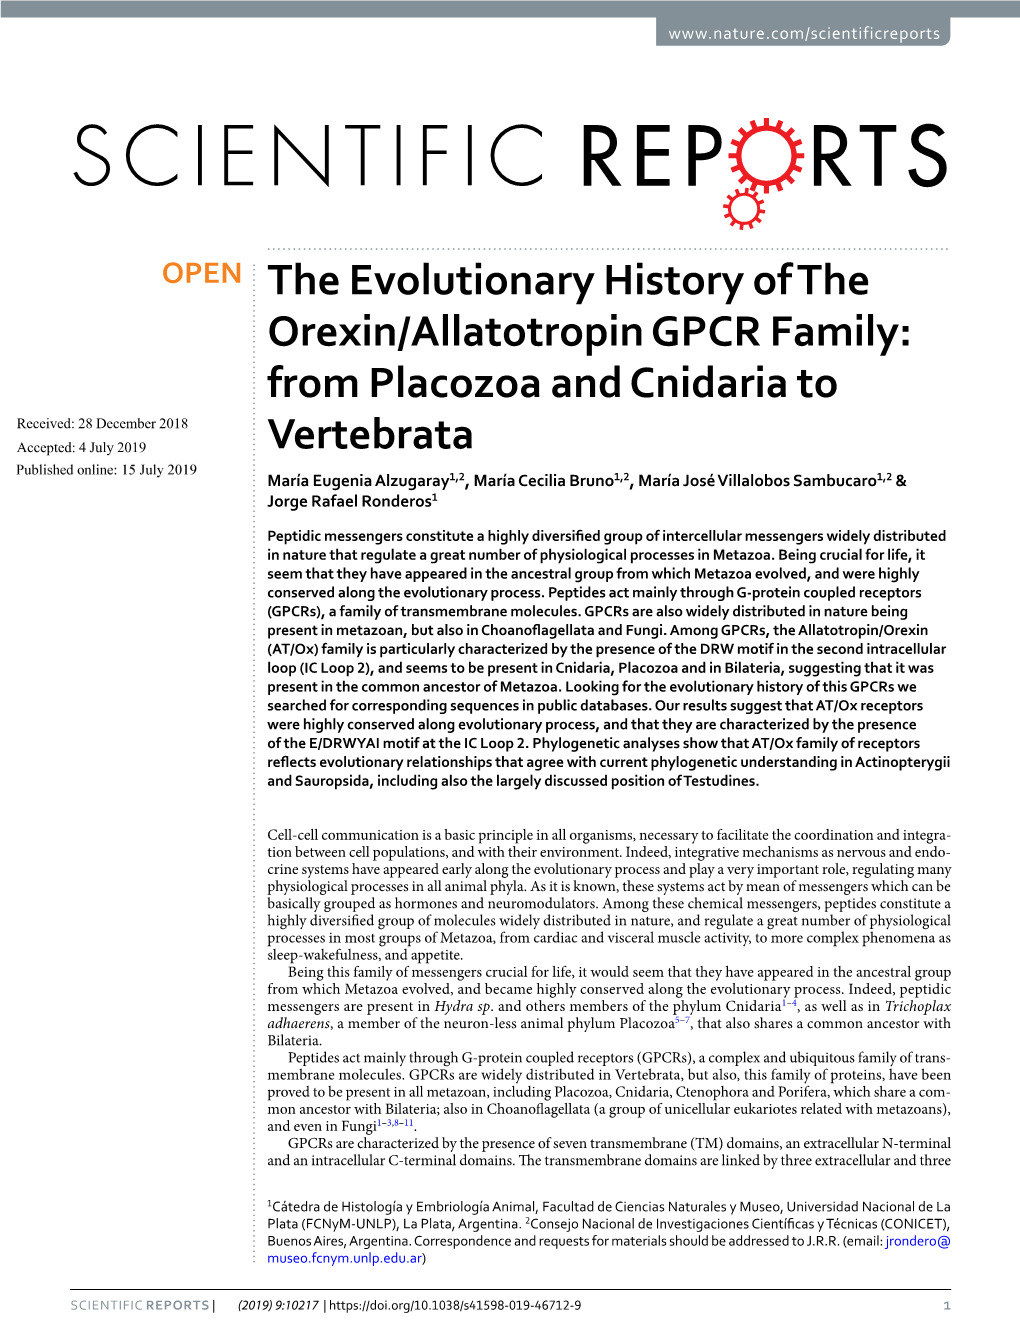 The Evolutionary History of the Orexin/Allatotropin GPCR Family: From